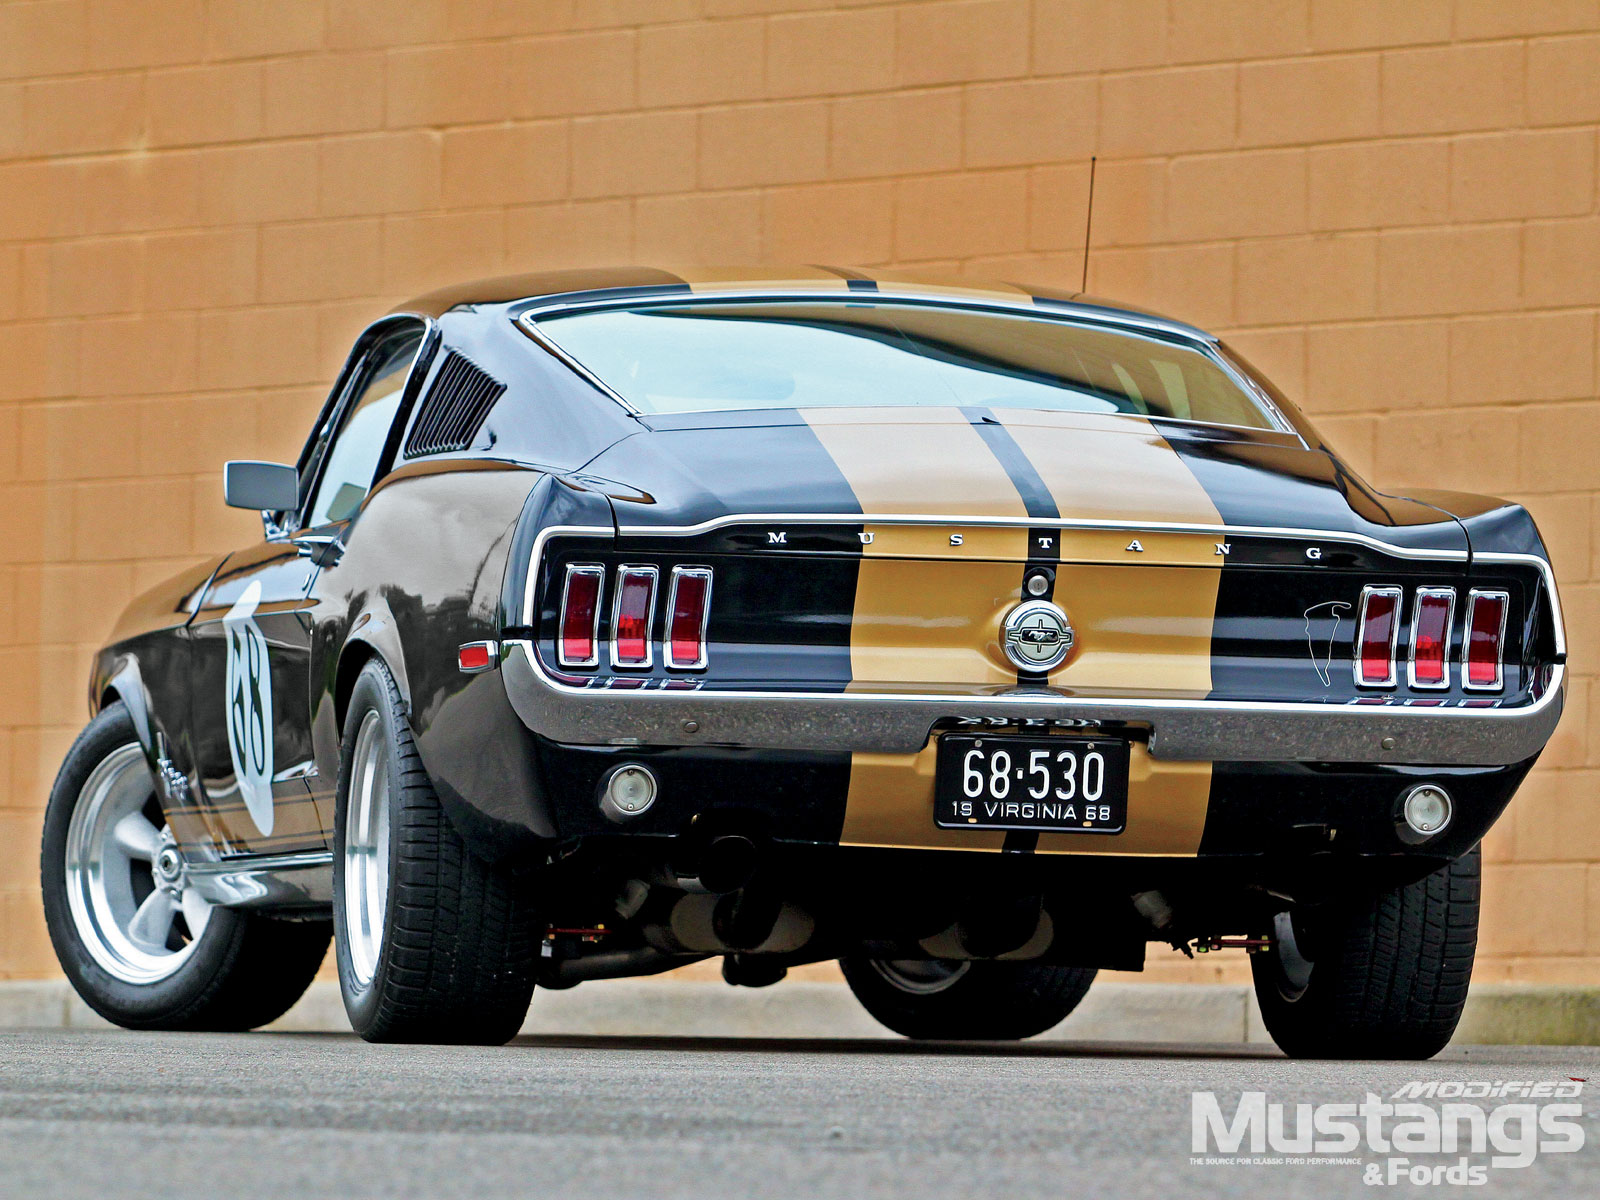 1968 Ford Mustang | eBay